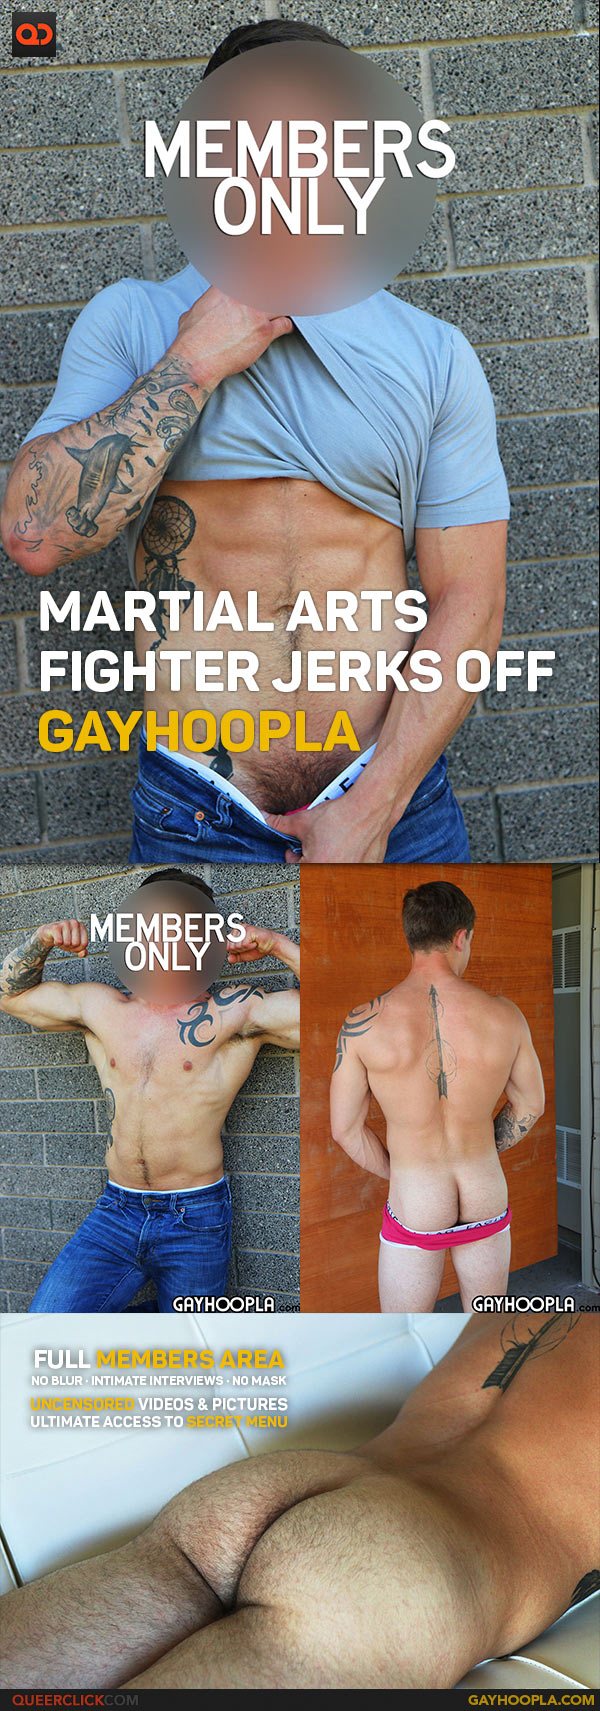 Gayhoopla: Martial Arts Fighter Jerks Off